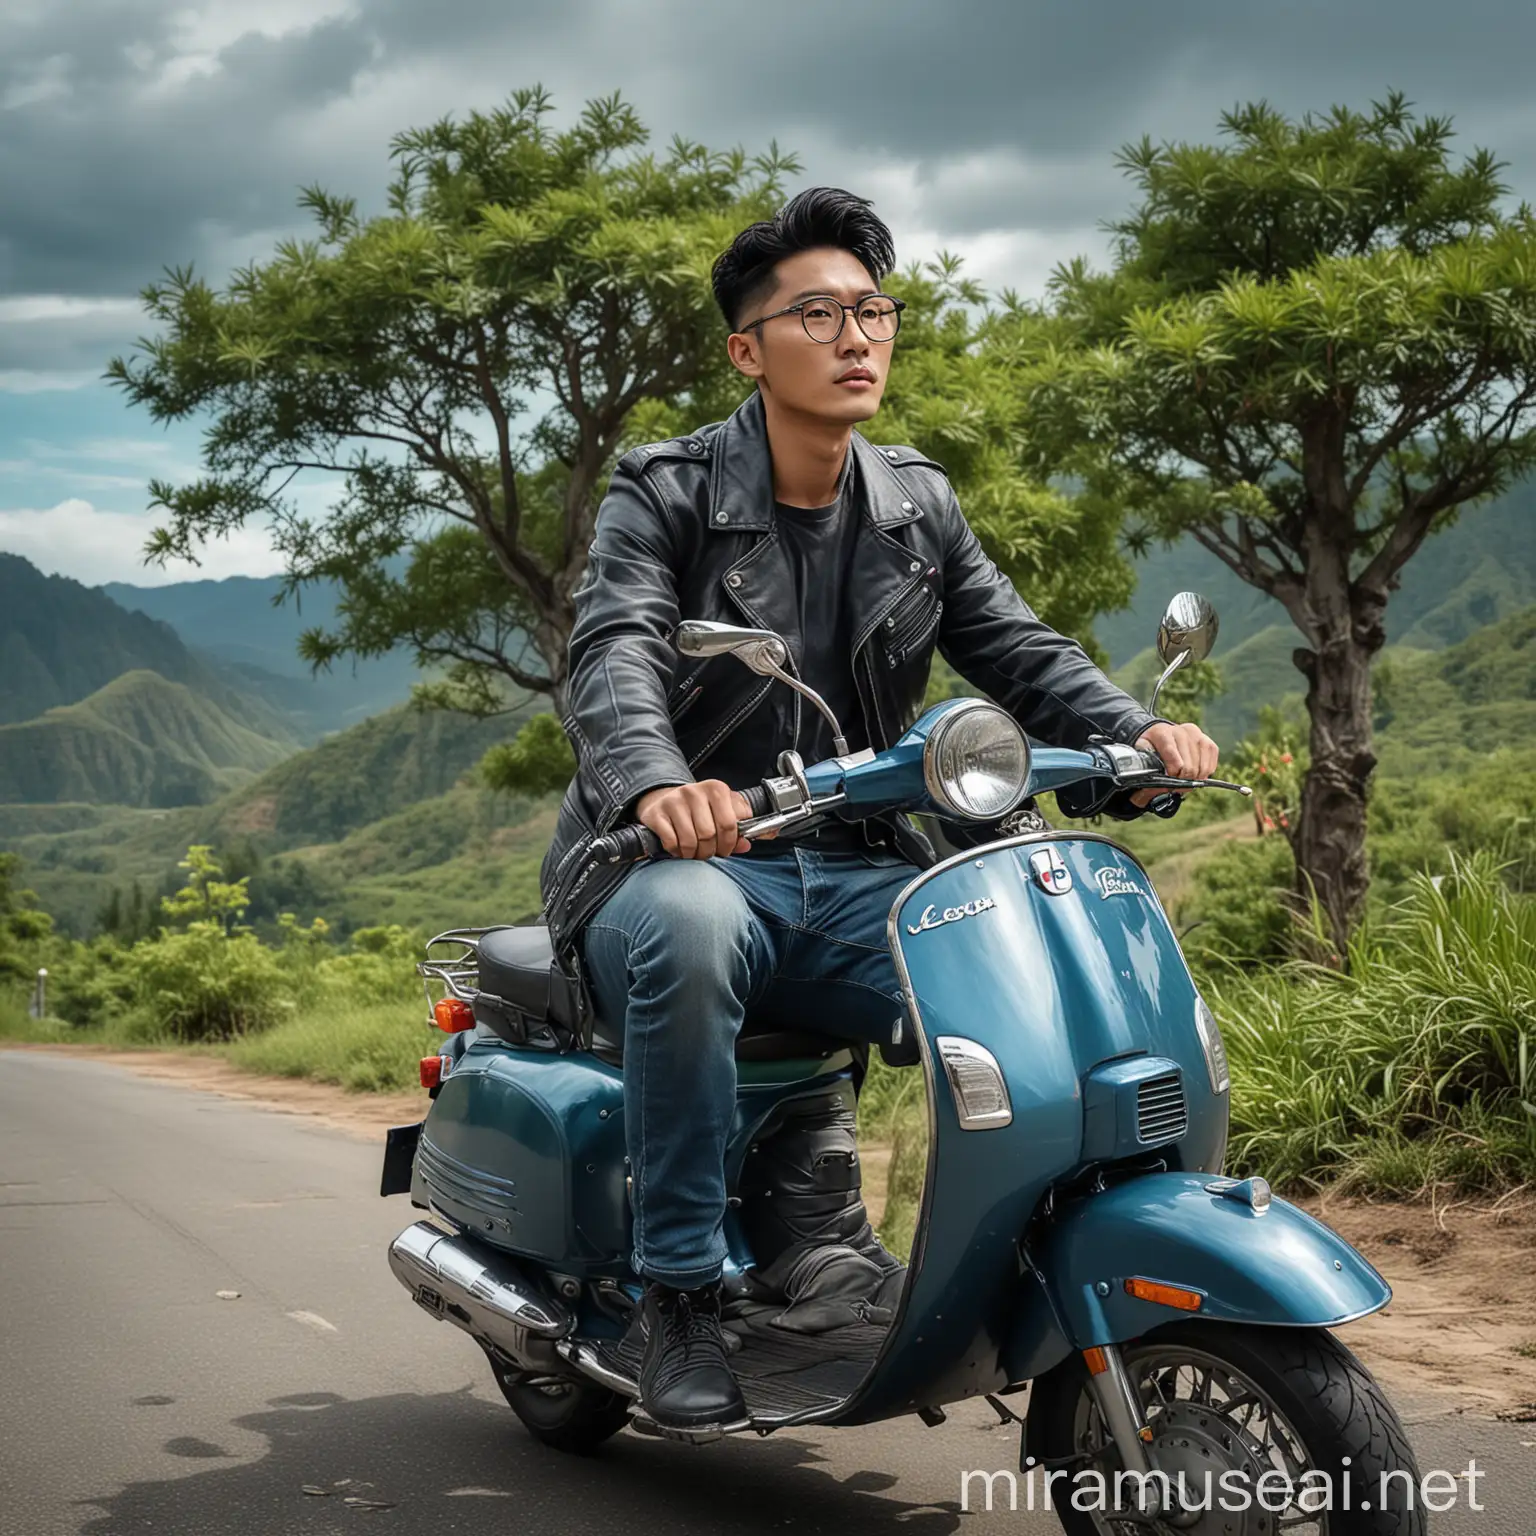 Stylish Korean Man on Vespa Motorcycle with Mount Bromo Backdrop